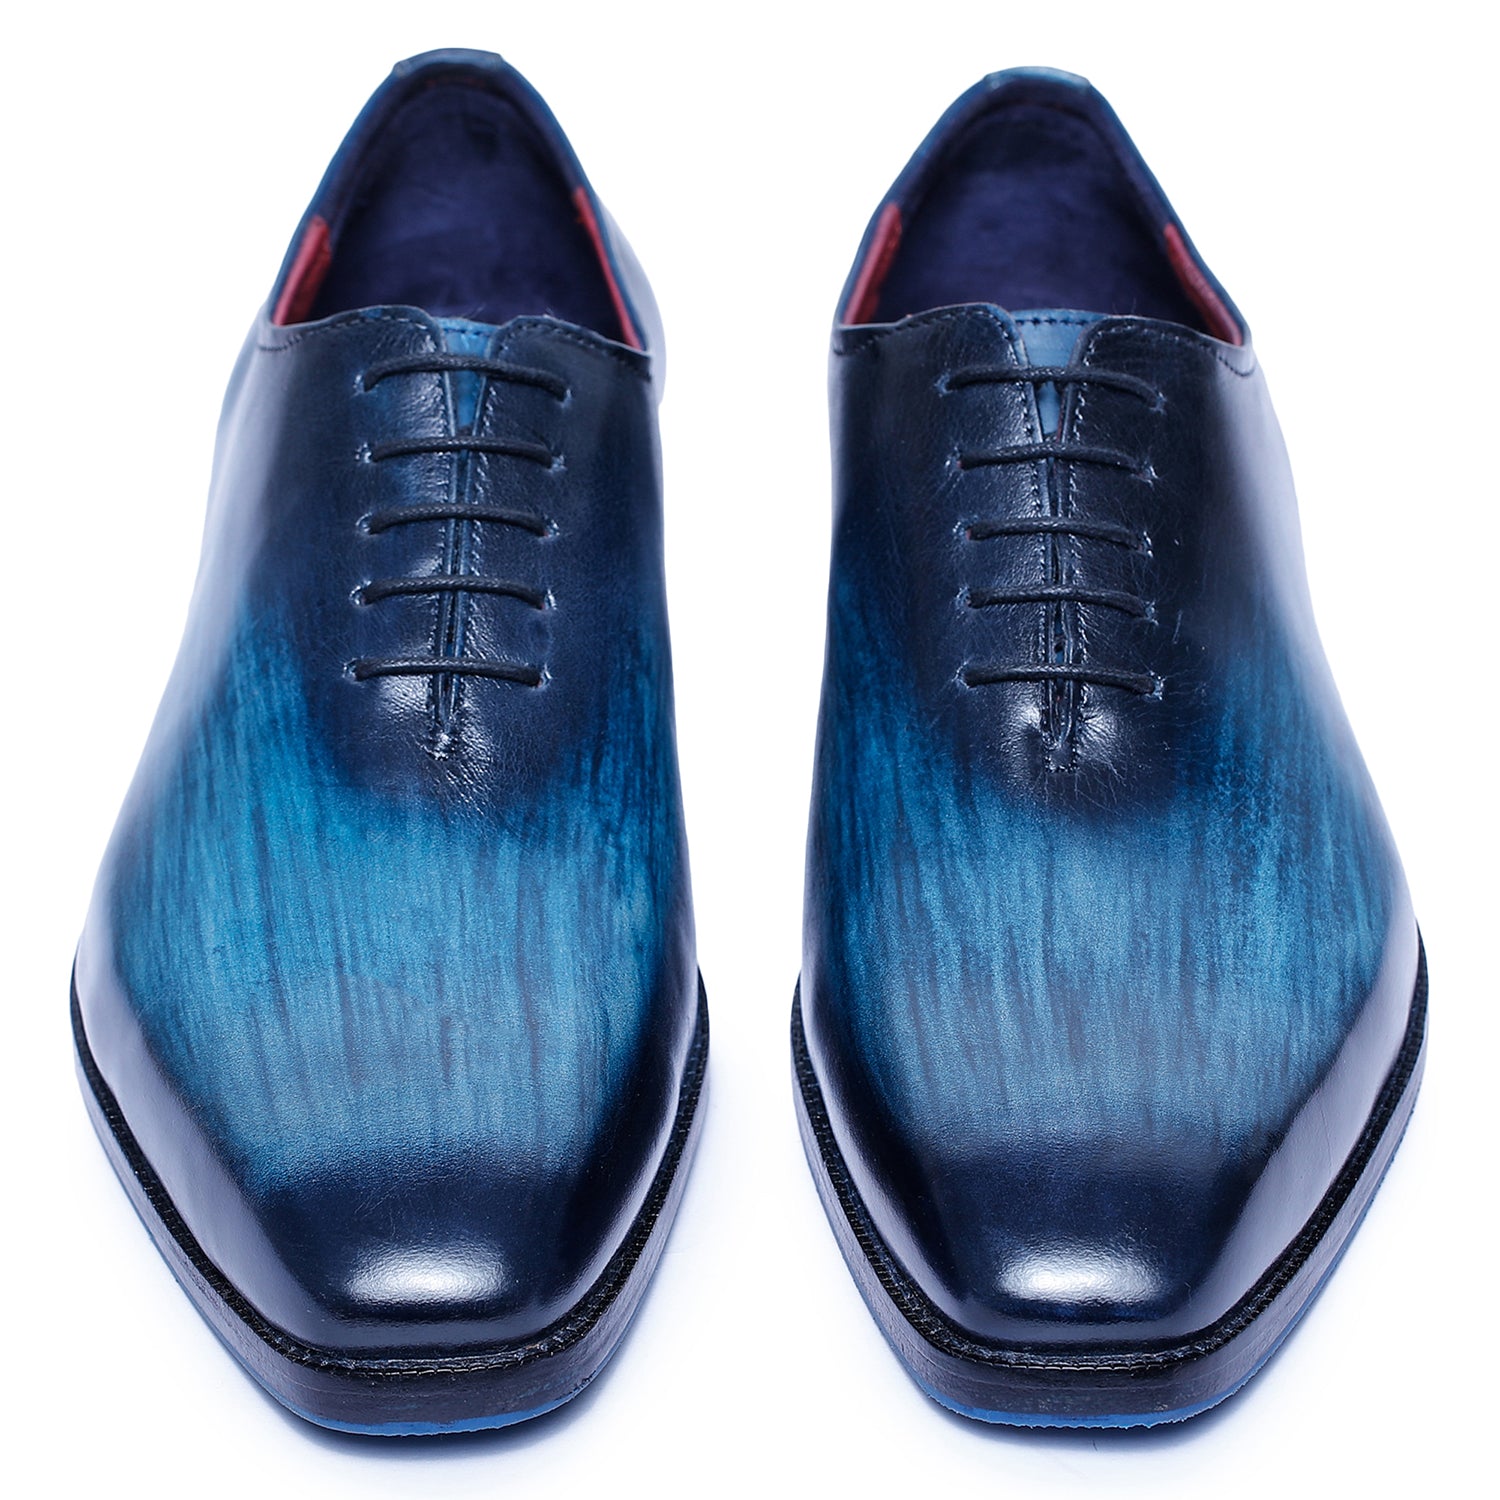 blue leather dress shoes